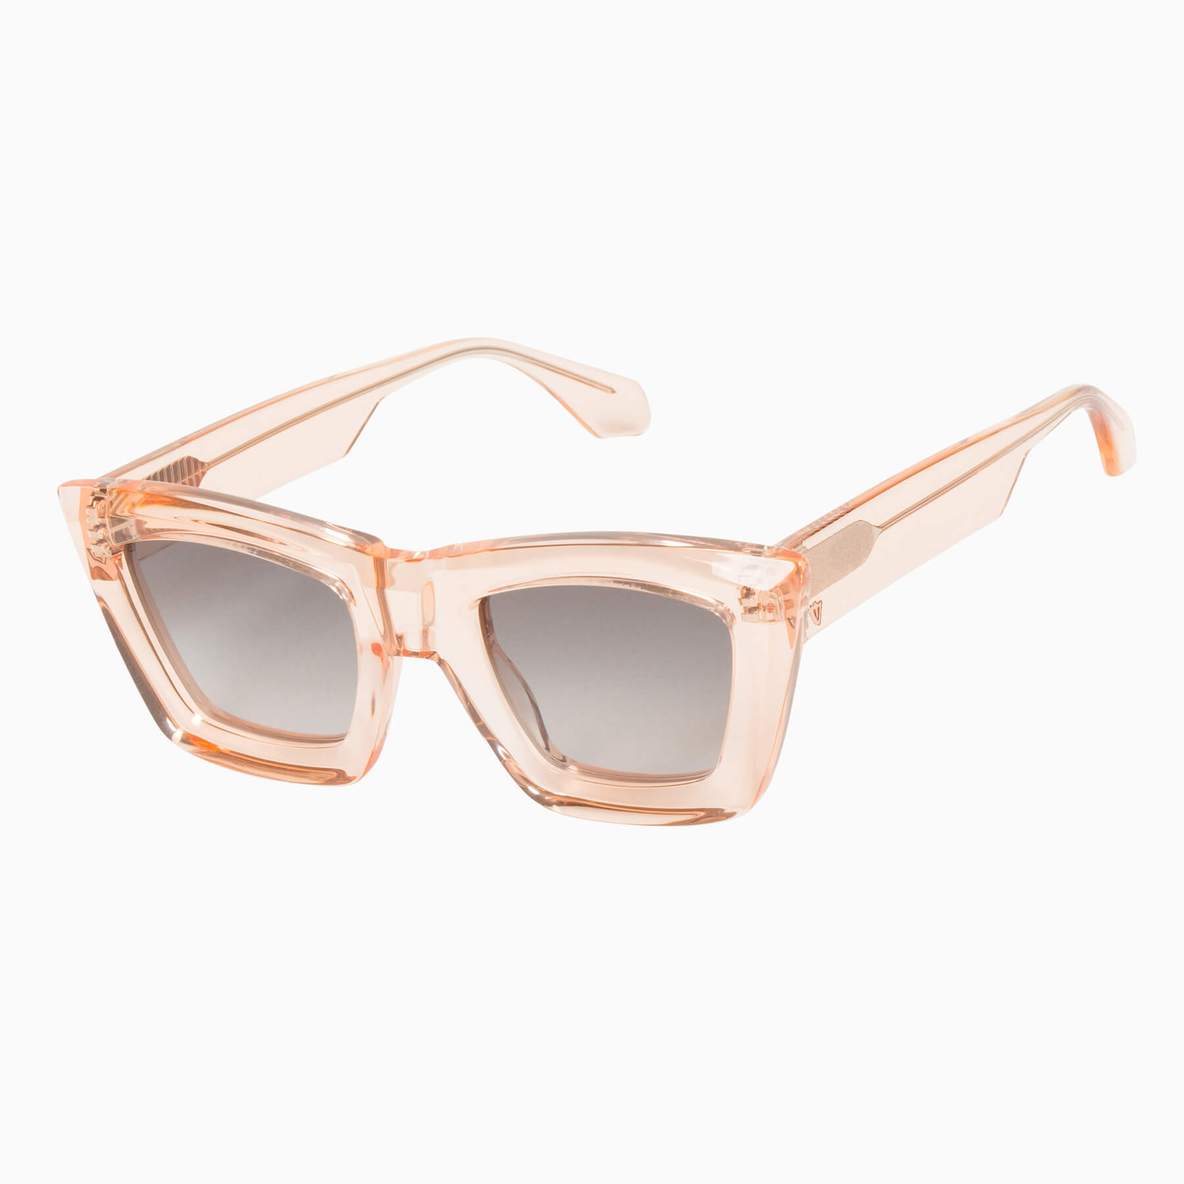 Soho | Sunglasses - Transparent Pink / Black Gradient Lens